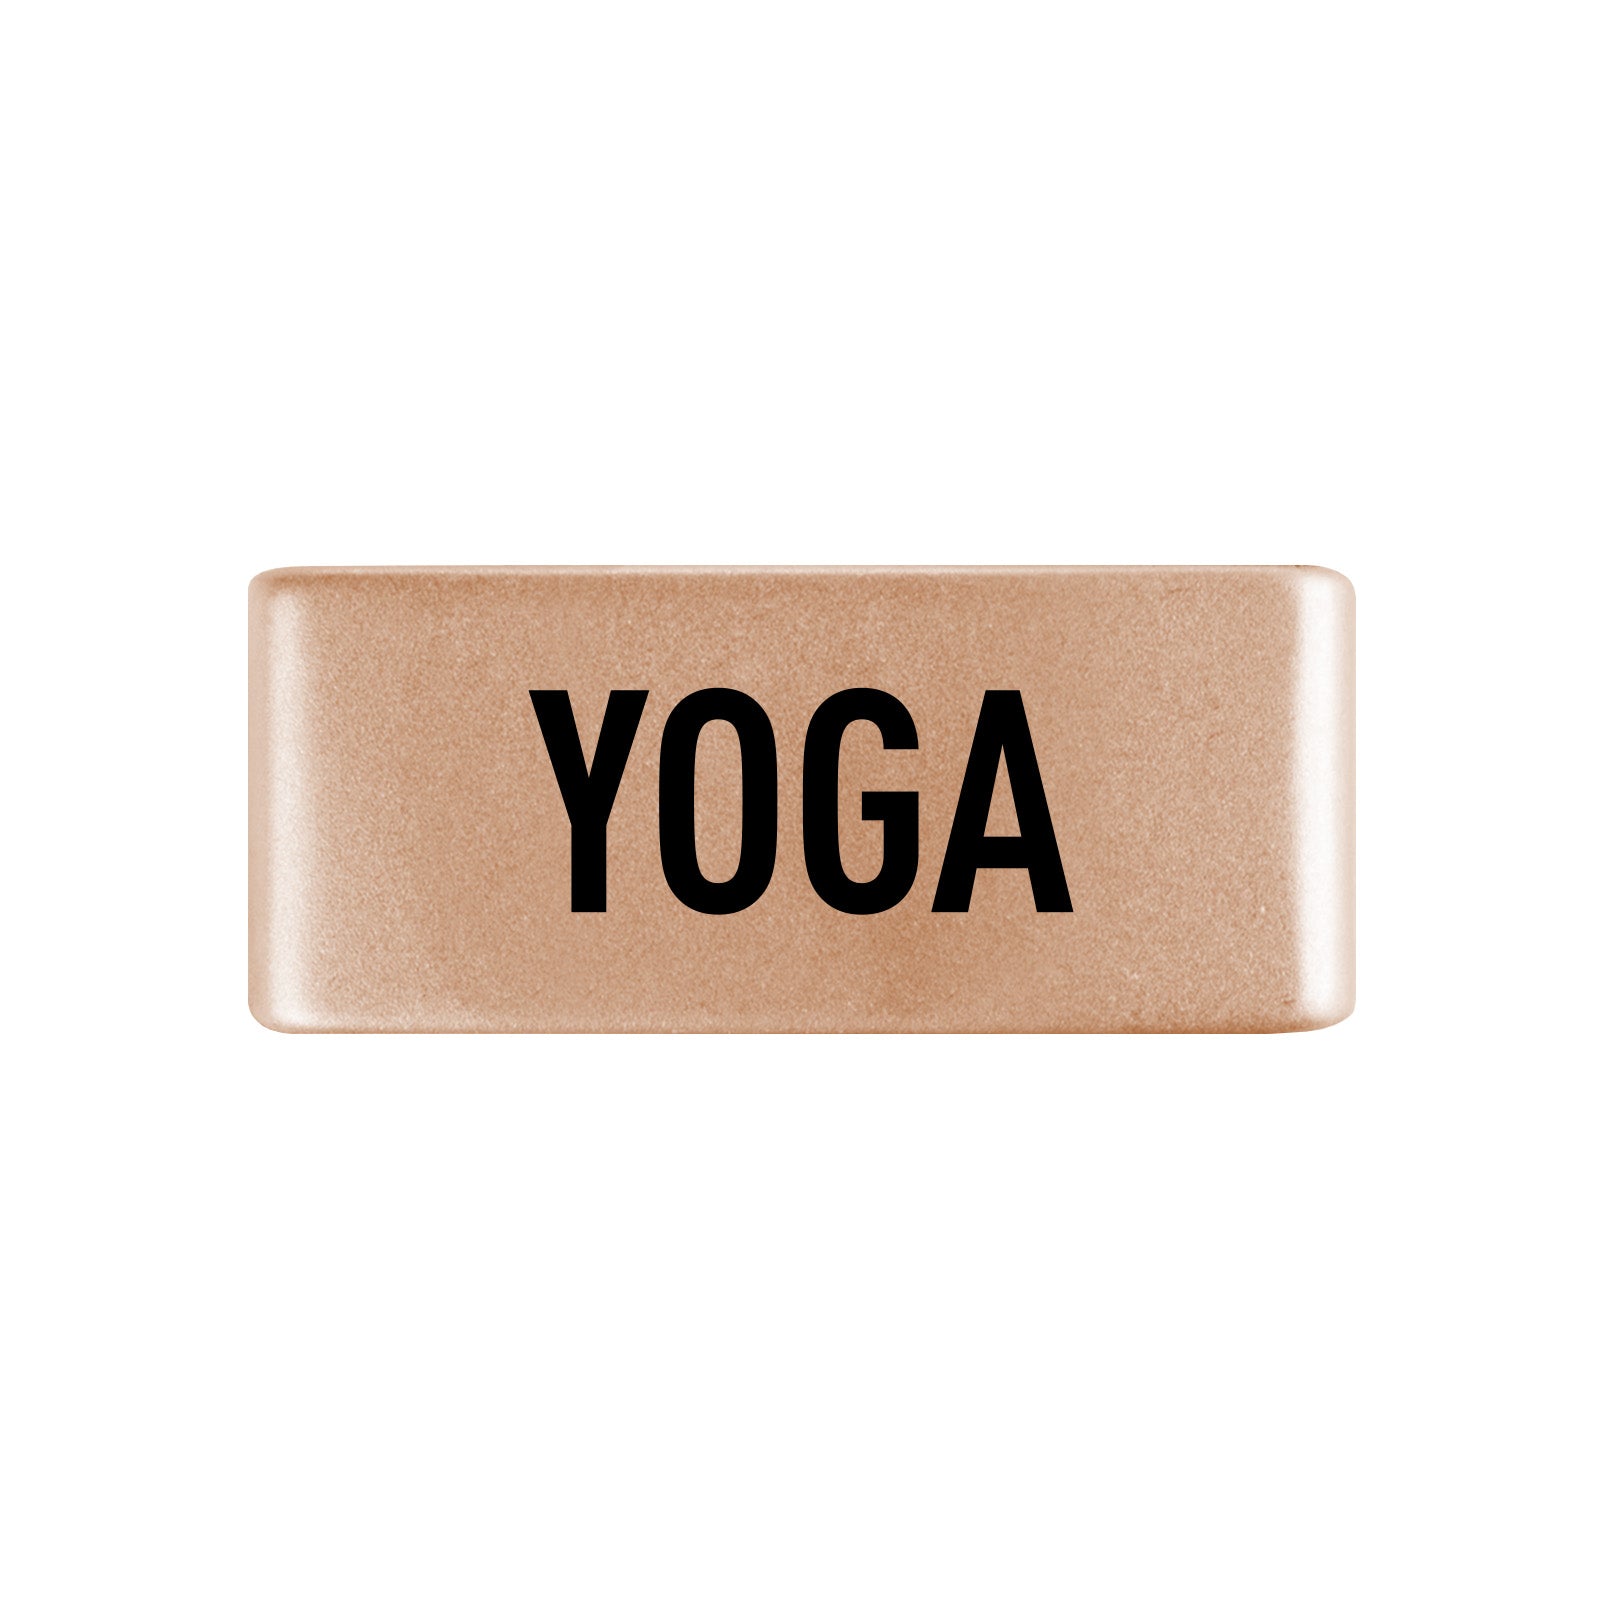 Yoga Badge Badge 13mm - ROAD iD